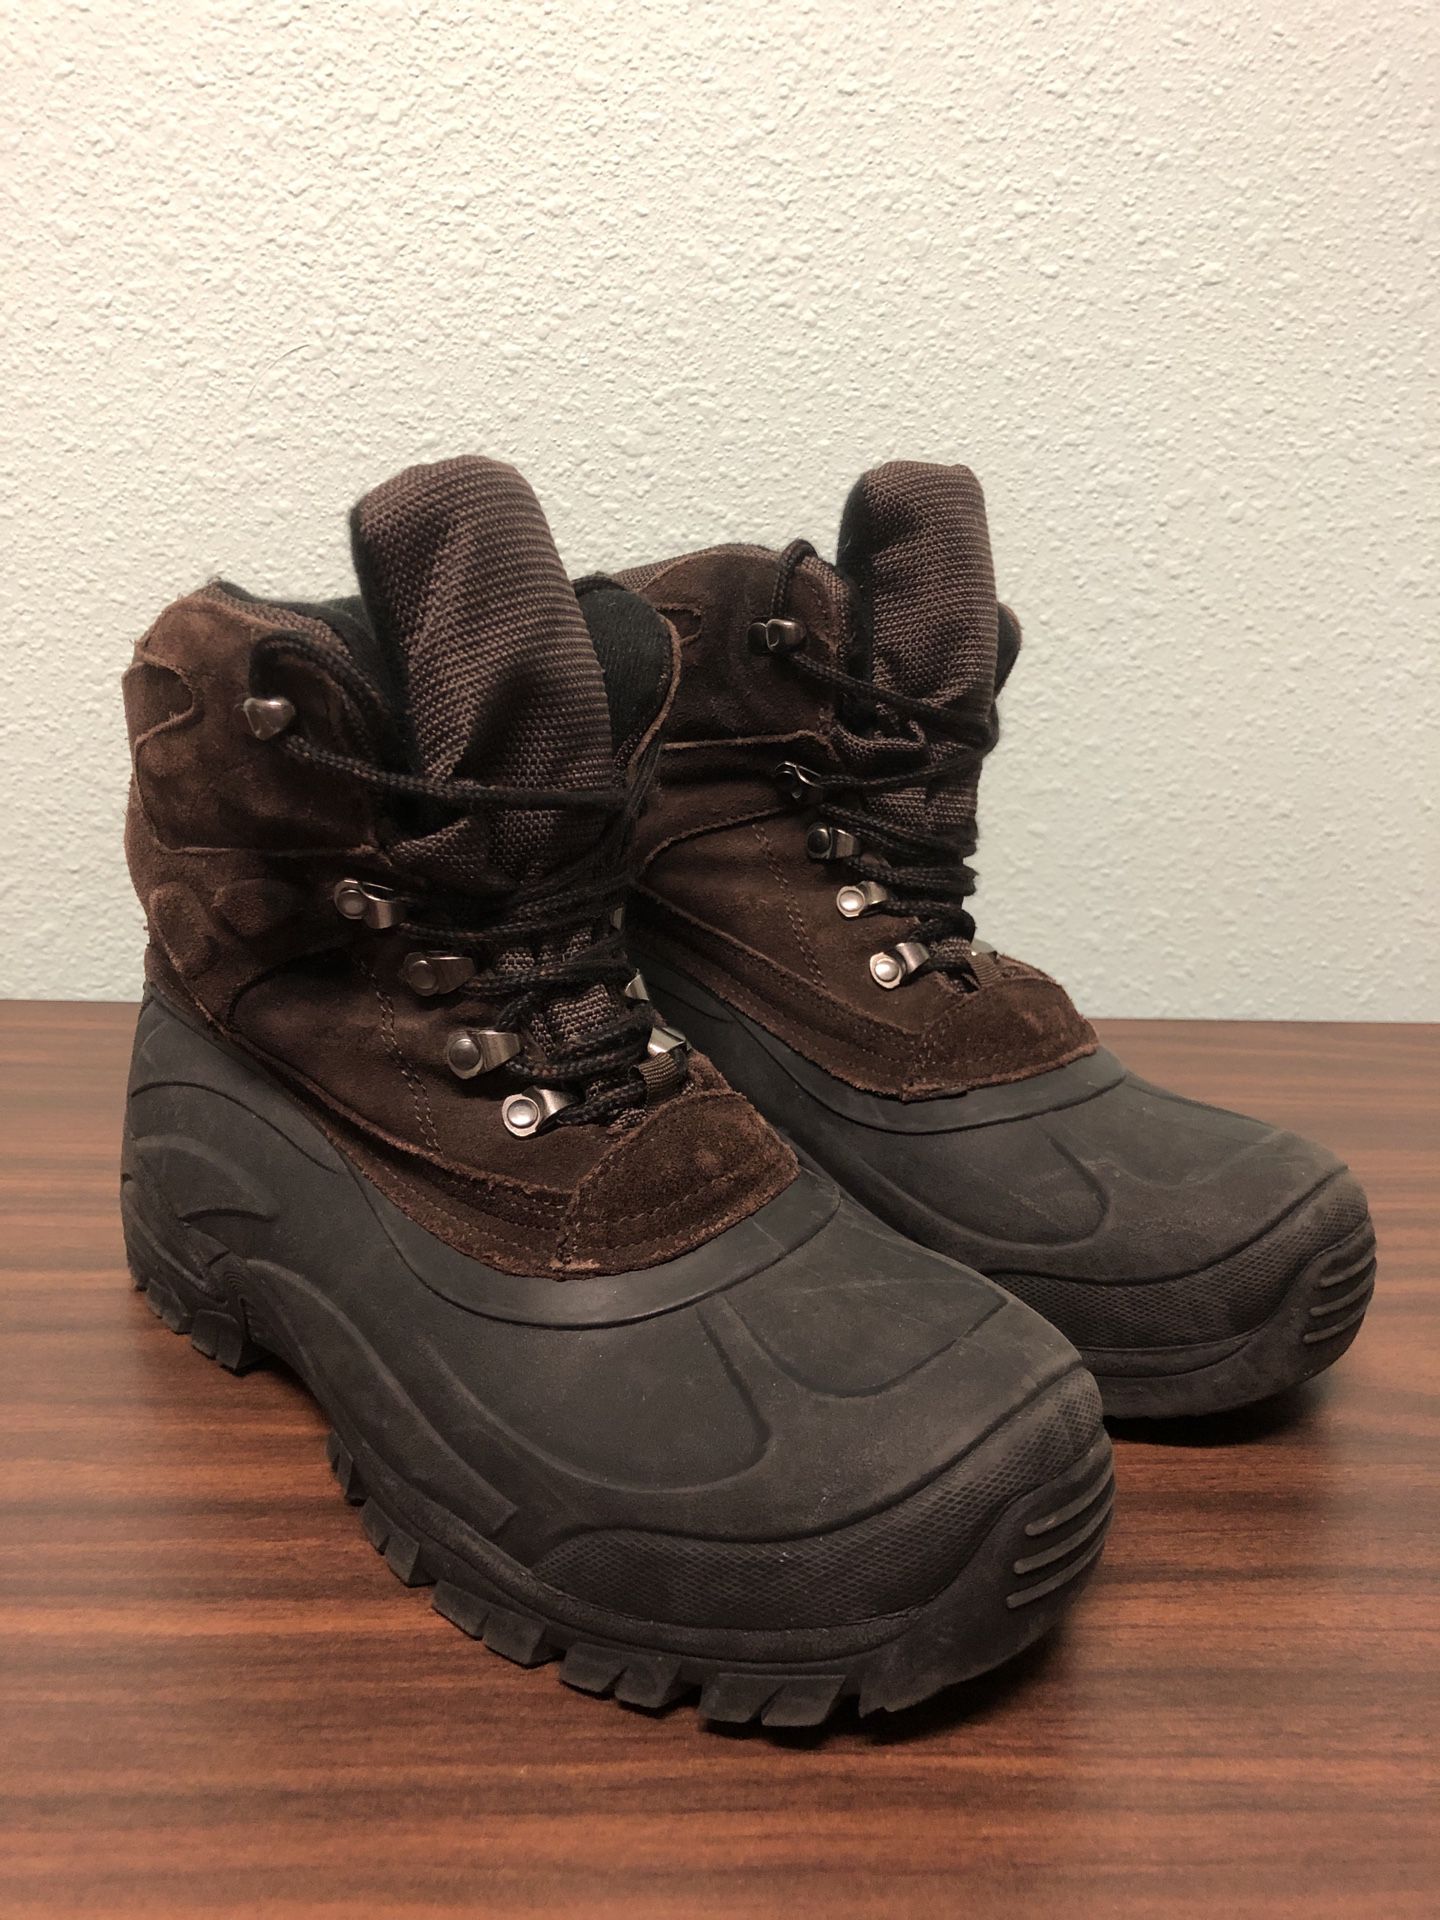 Men’s Waterproof Boots Size 10